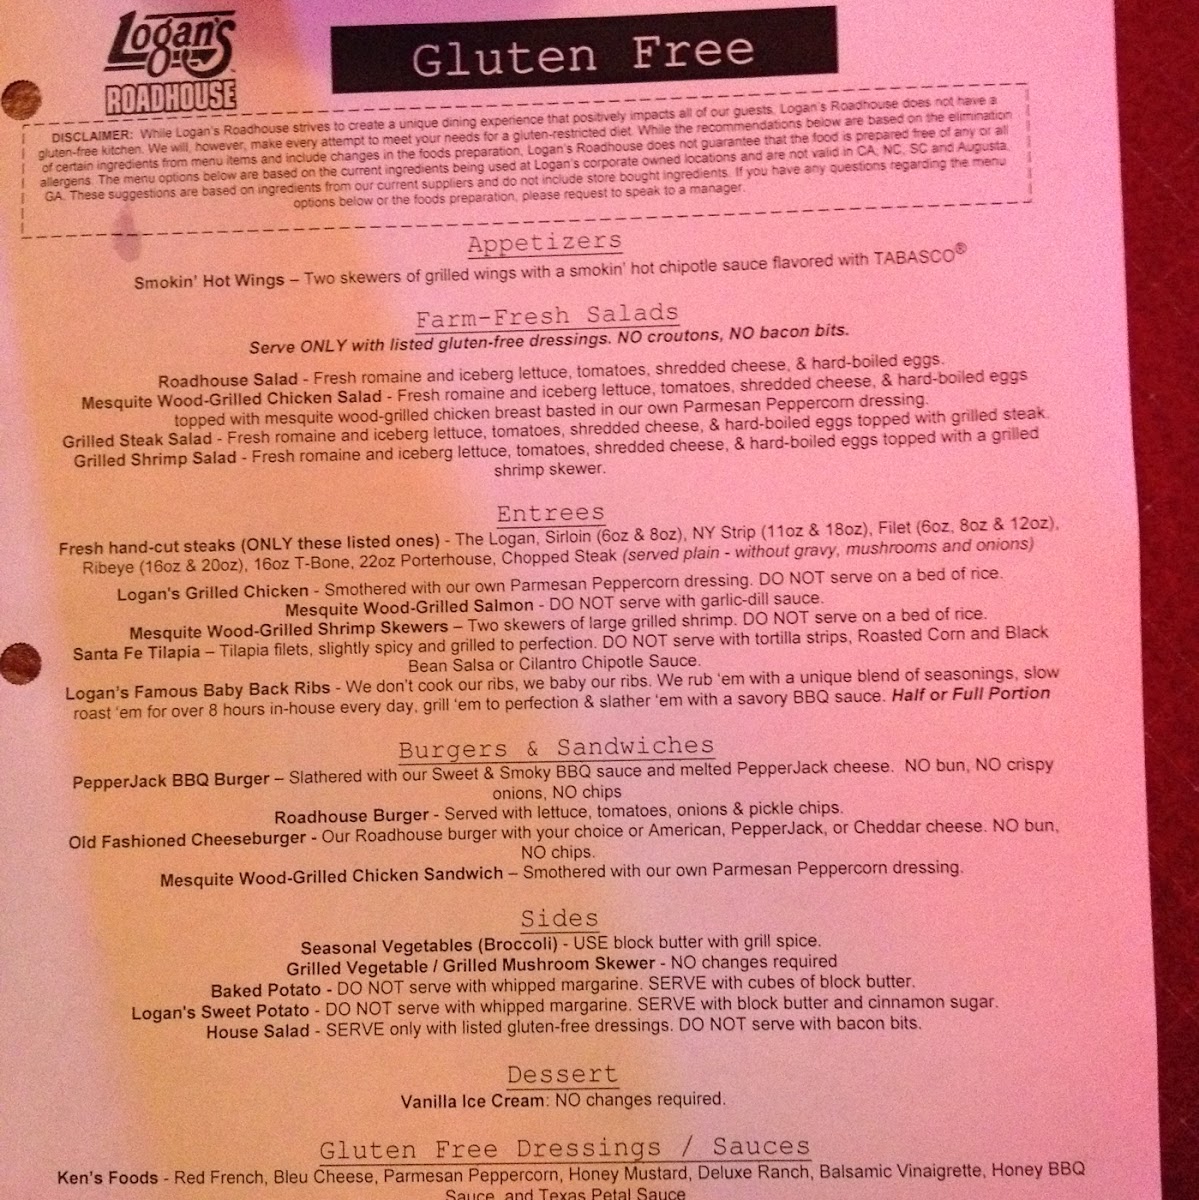 Gluten-Free at Logan's Roadhouse